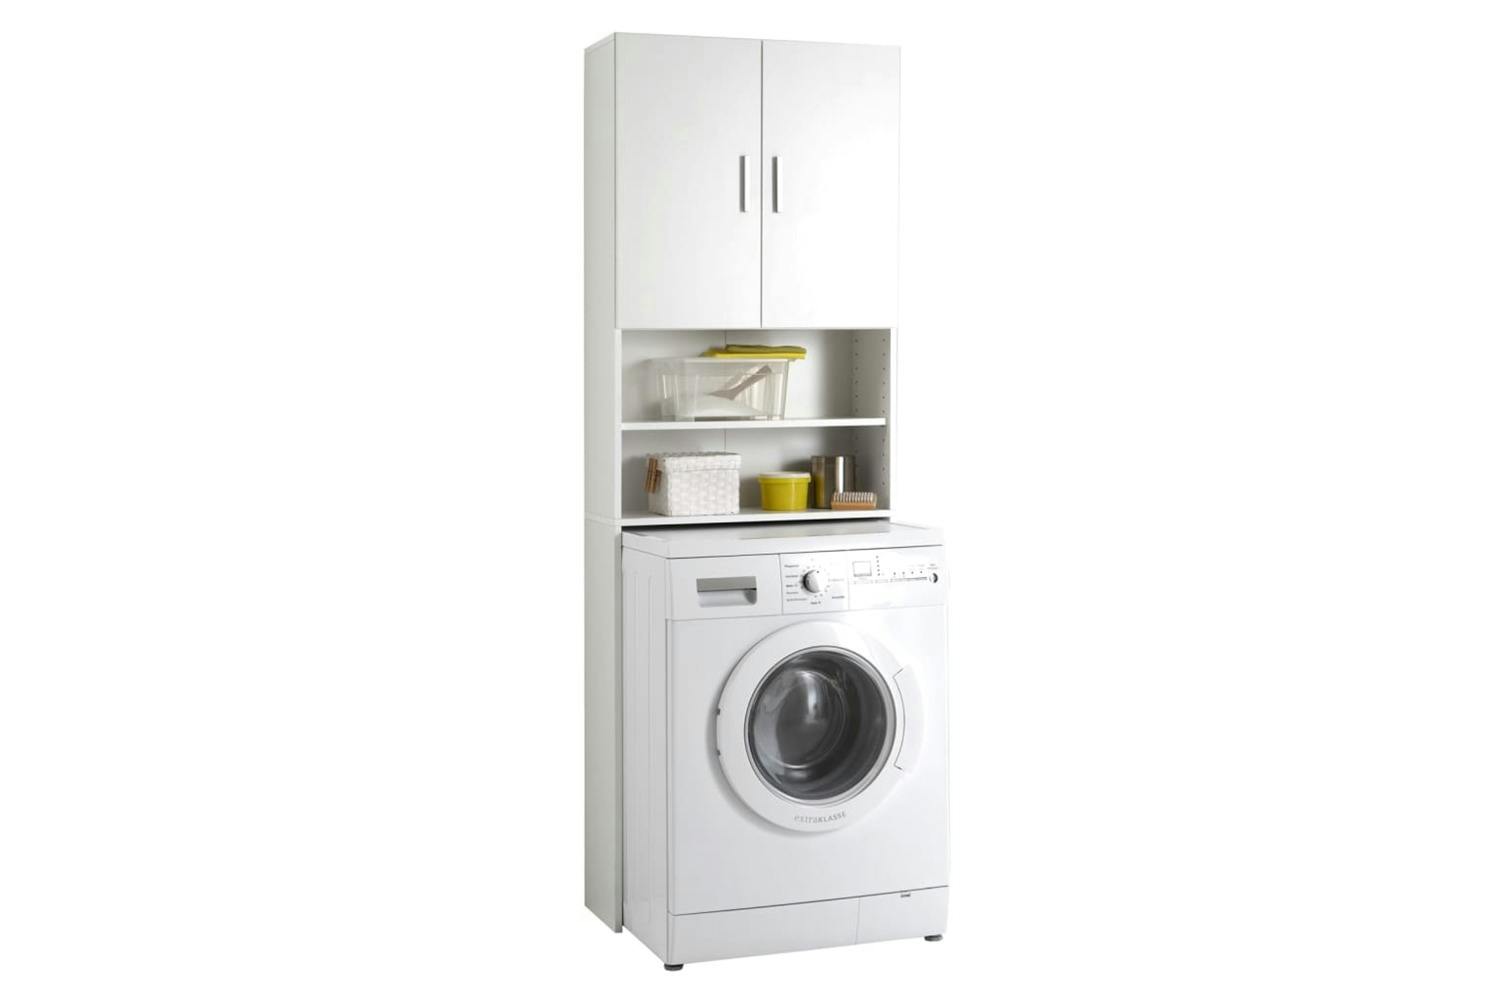 Fmd 445216 Washing Machine Cabinet With Storage Space White